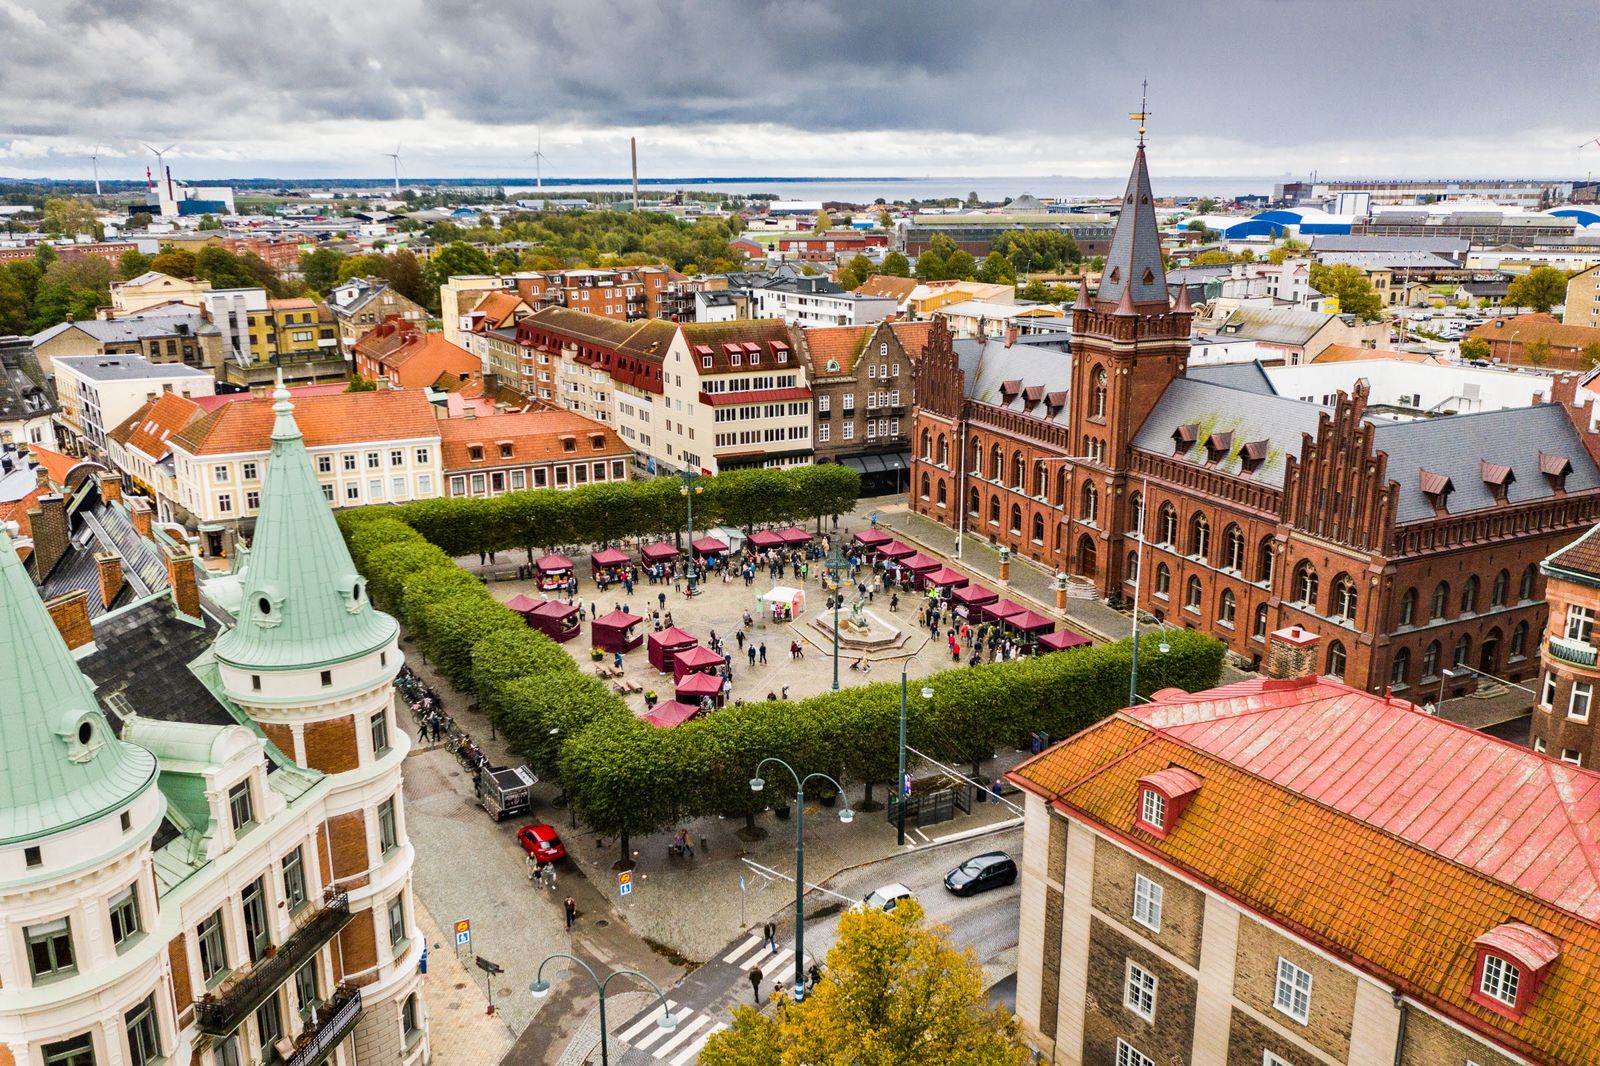 Aereal view of Rådhustorget Marknad, one of Landskrona main square